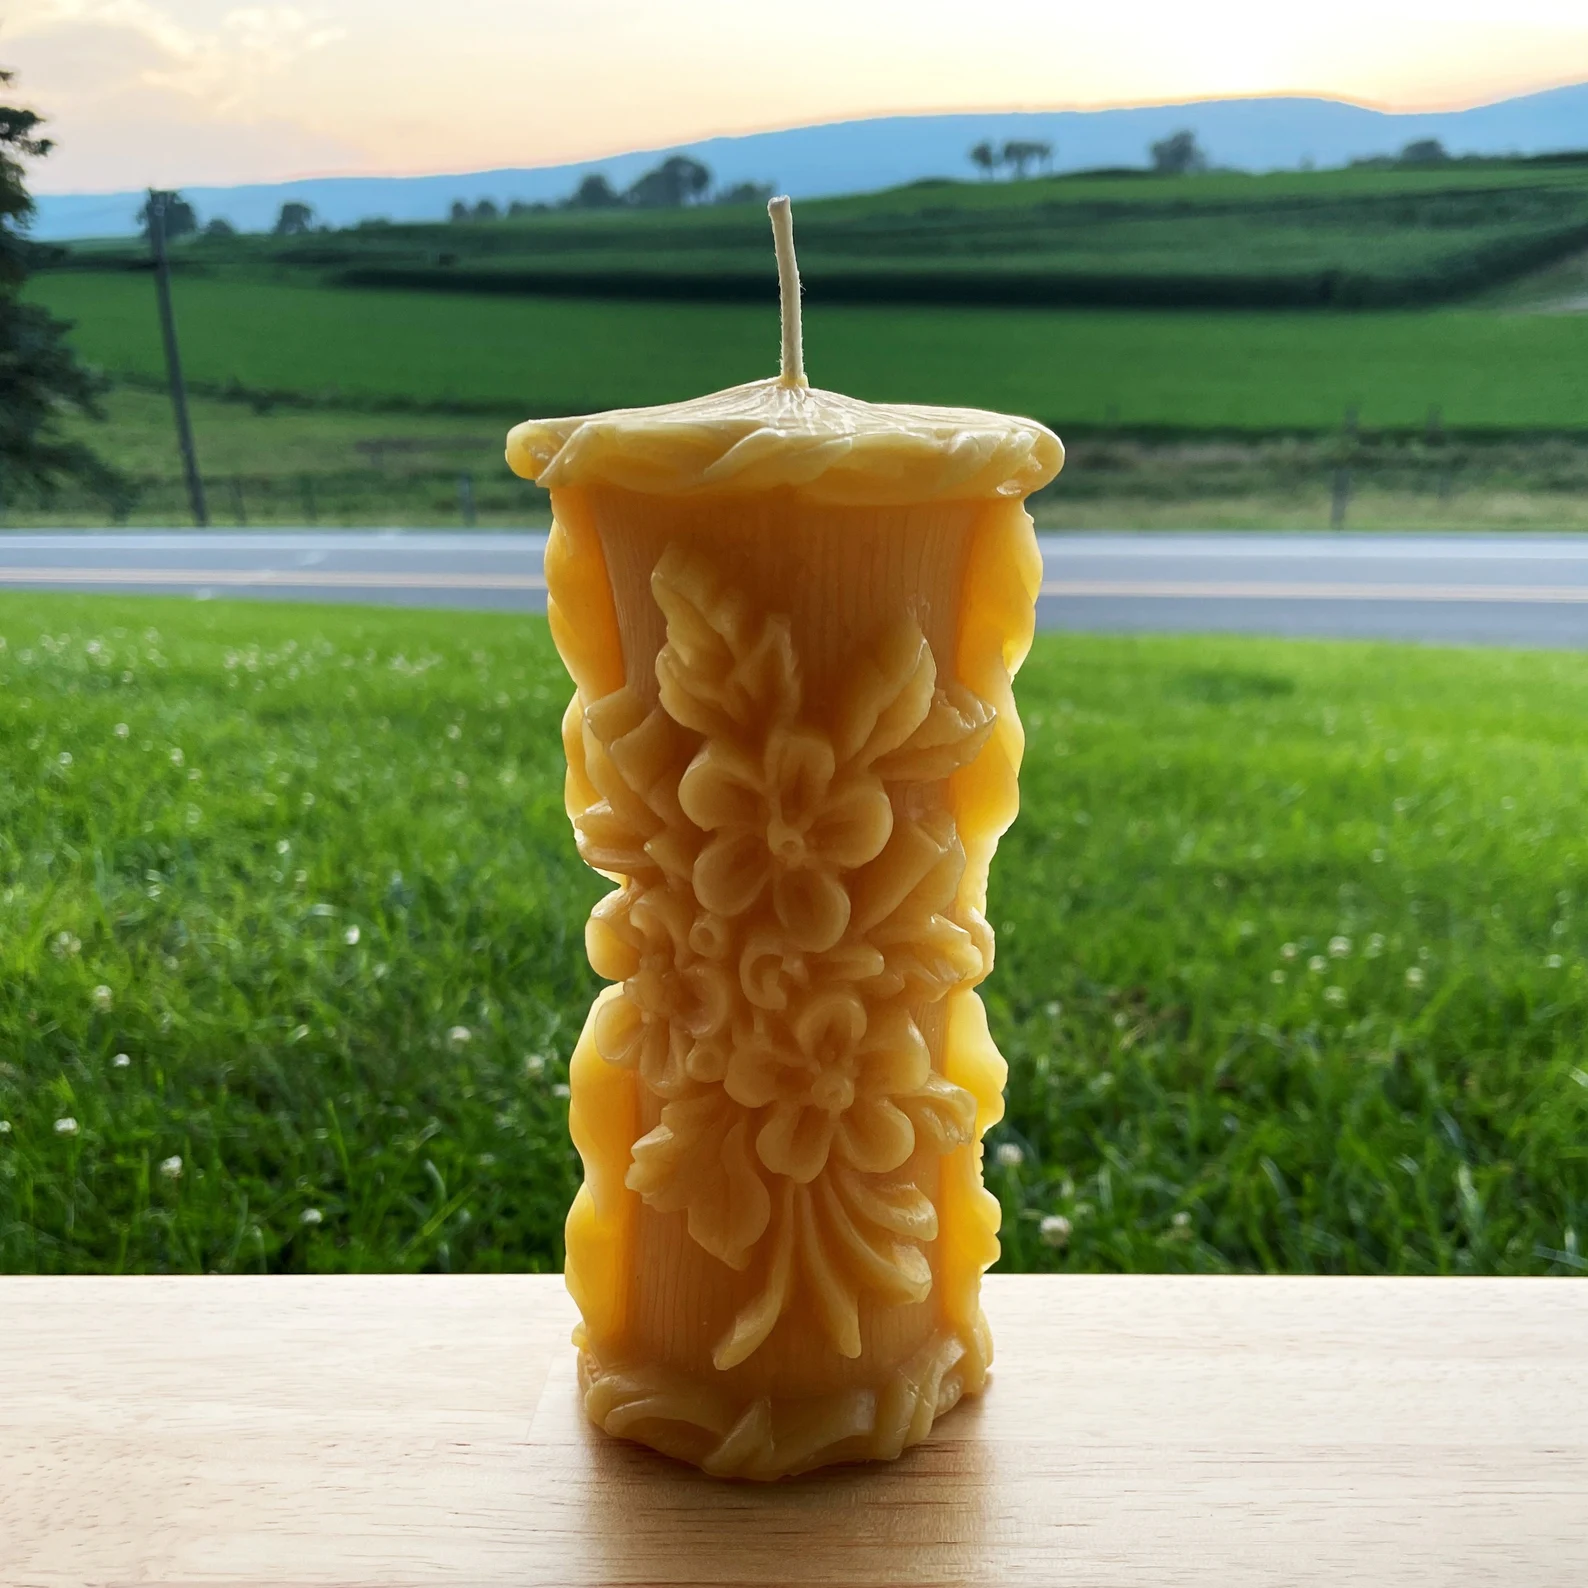 Bee Pillar Beeswax Candle - 100% Pure Beeswax